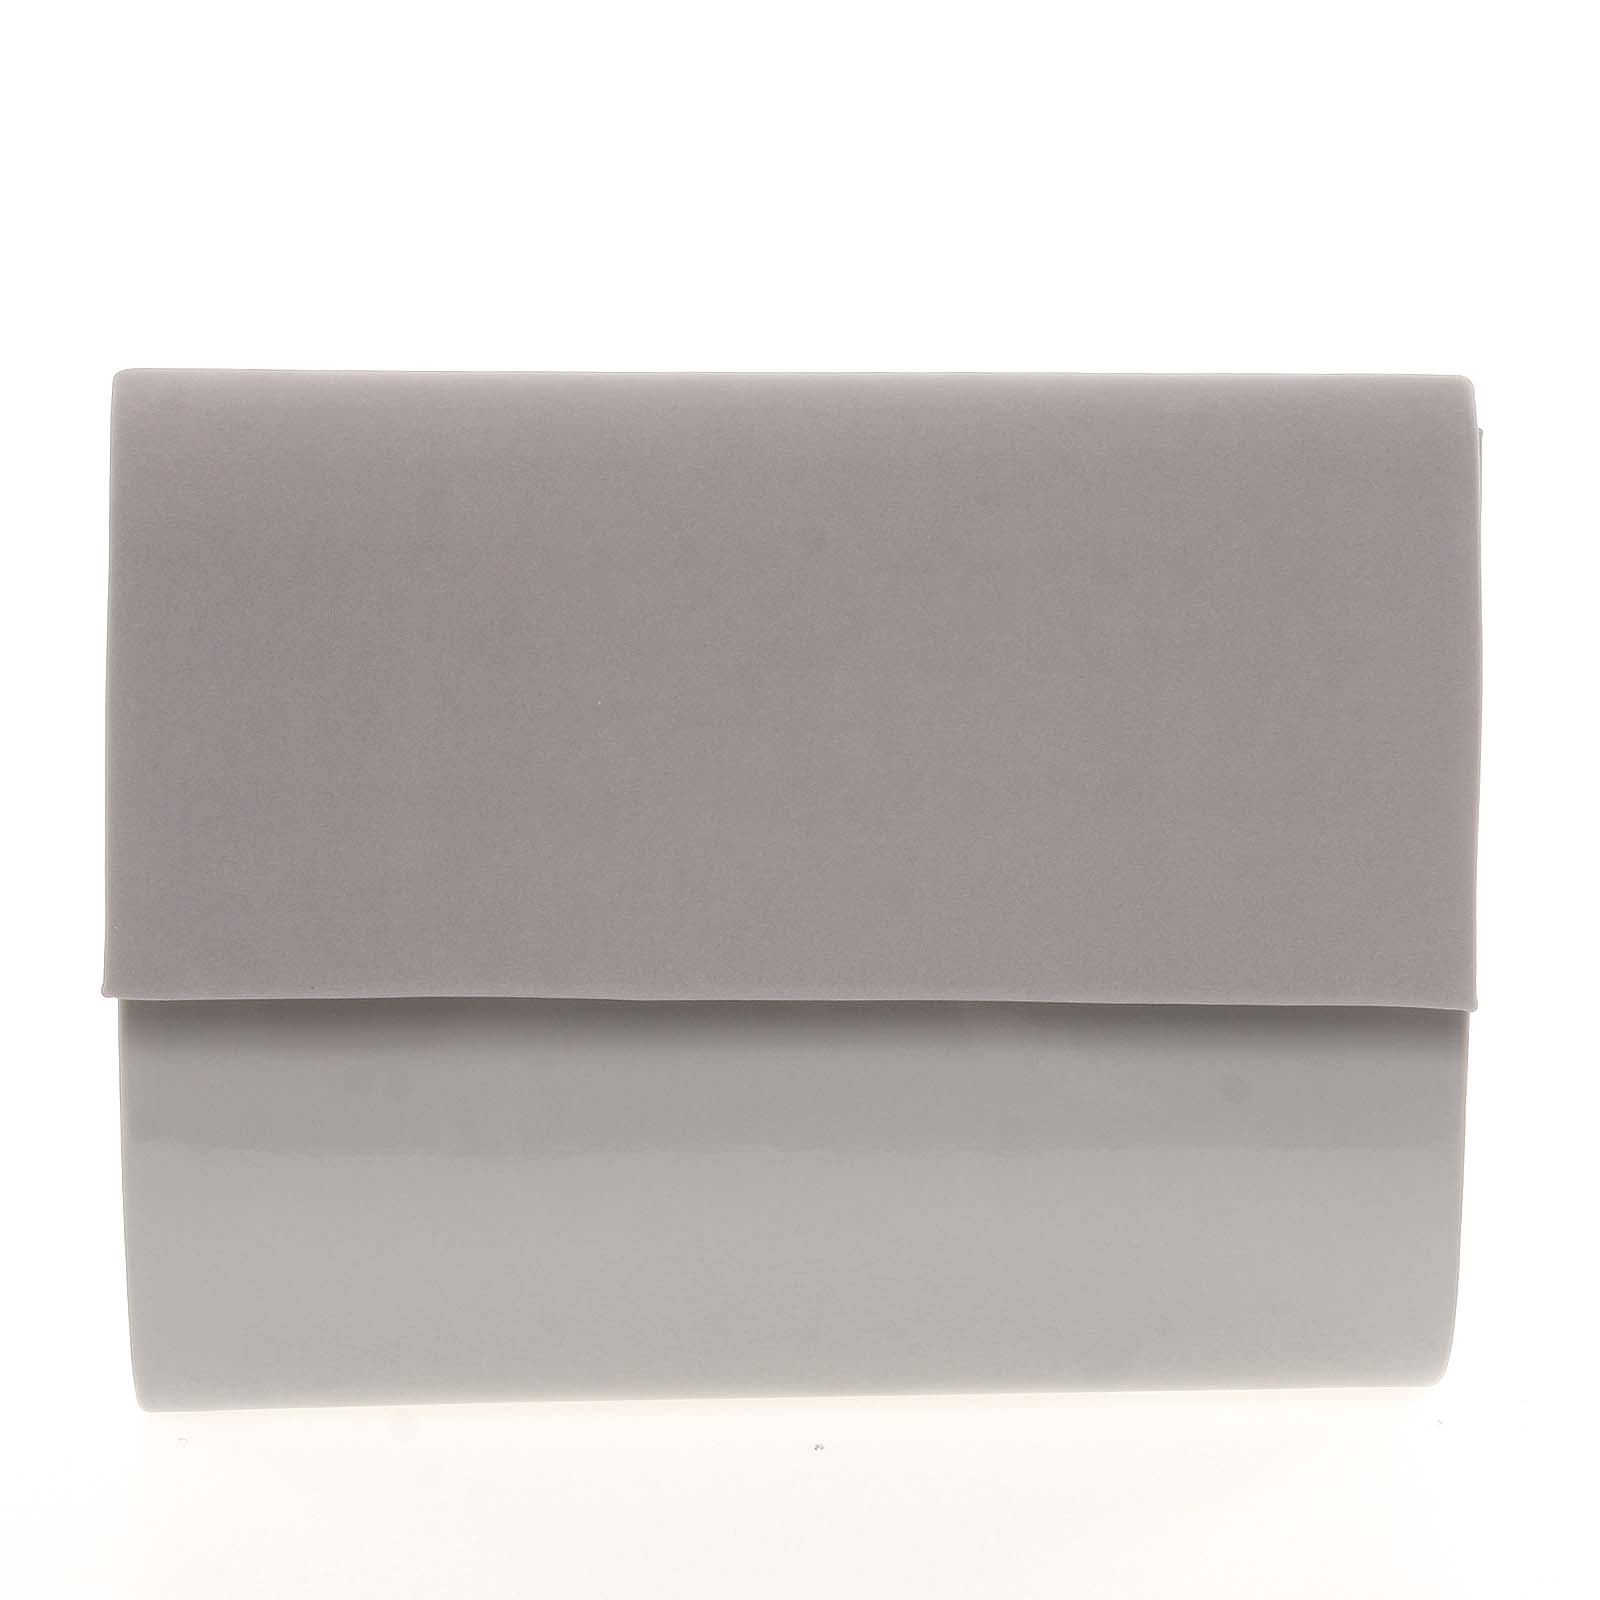 Stredná dámska elegantná listová kabelka sivá semišová - Delami Sandiego